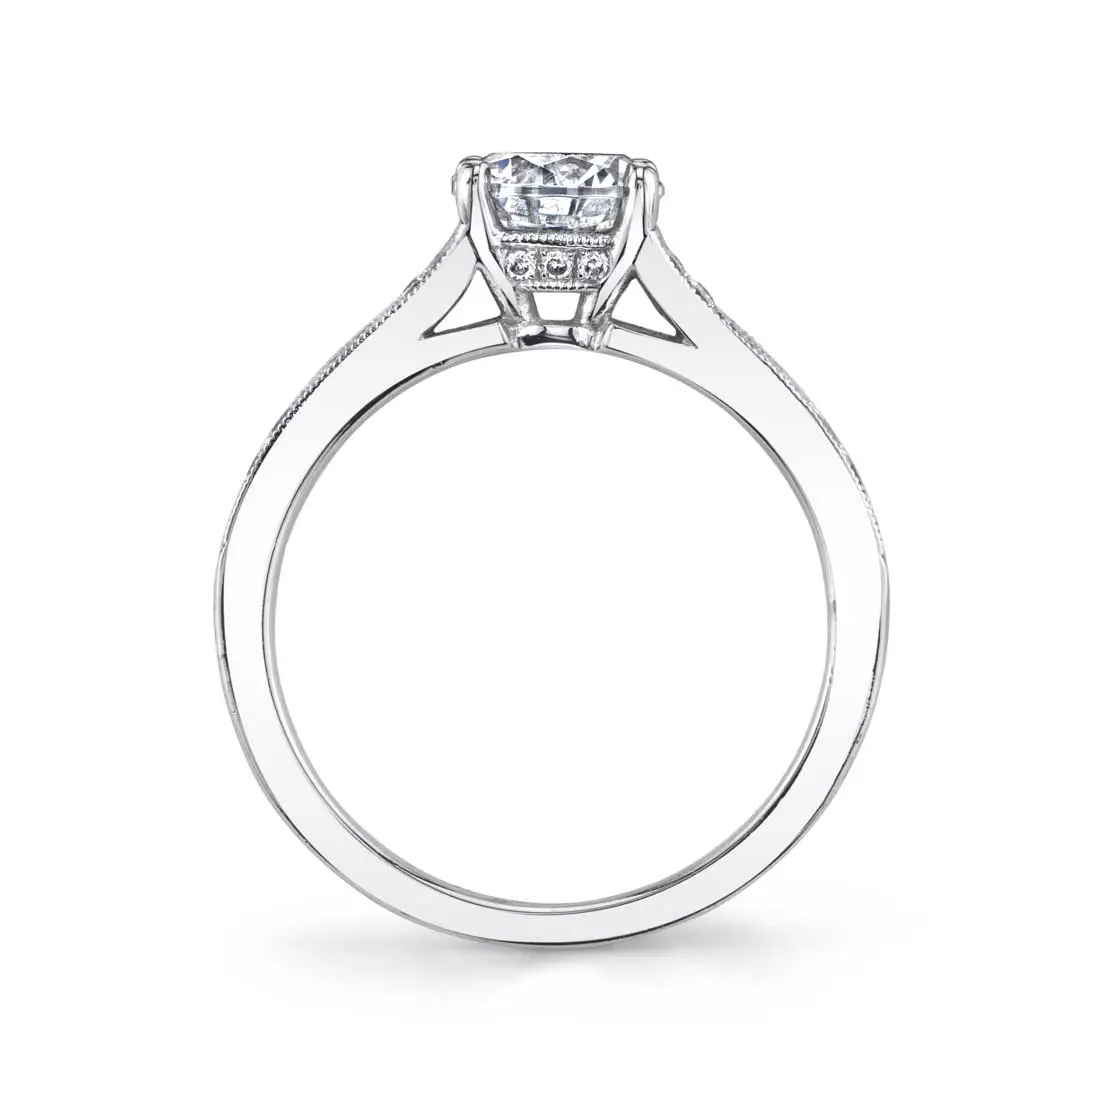 Vintage Inspired Engagement Ring